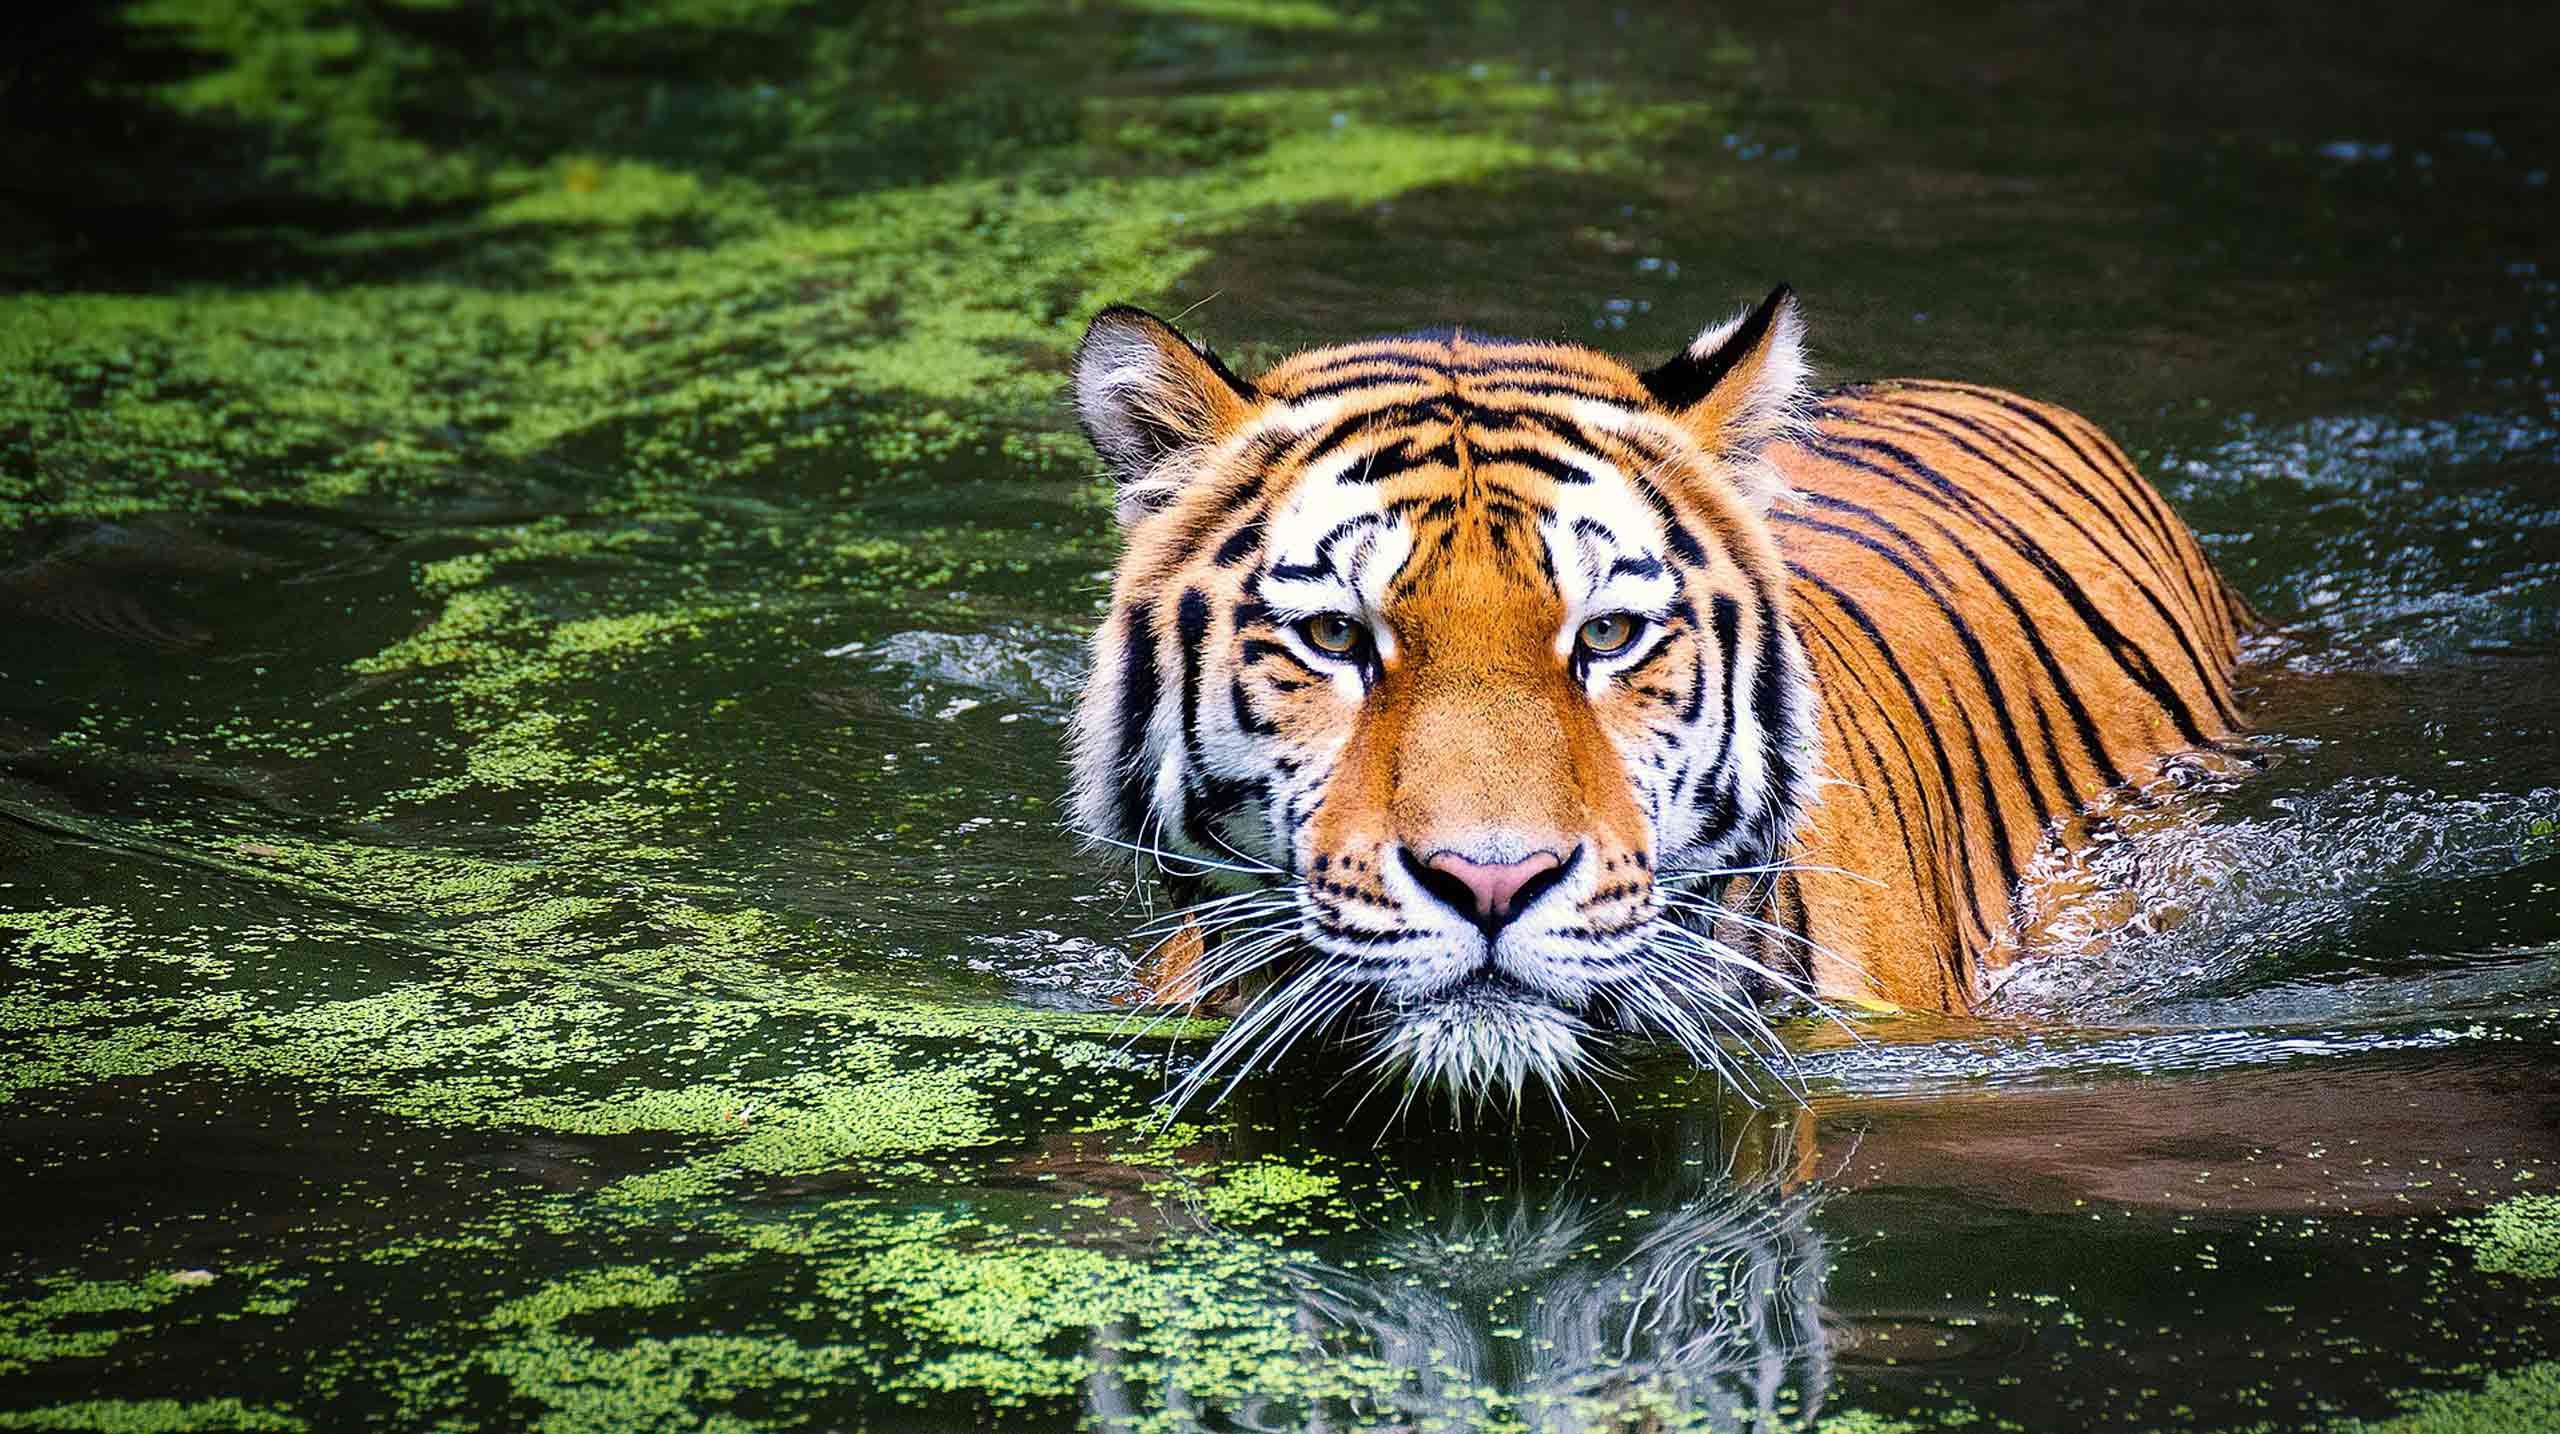 Bengali tiger in India